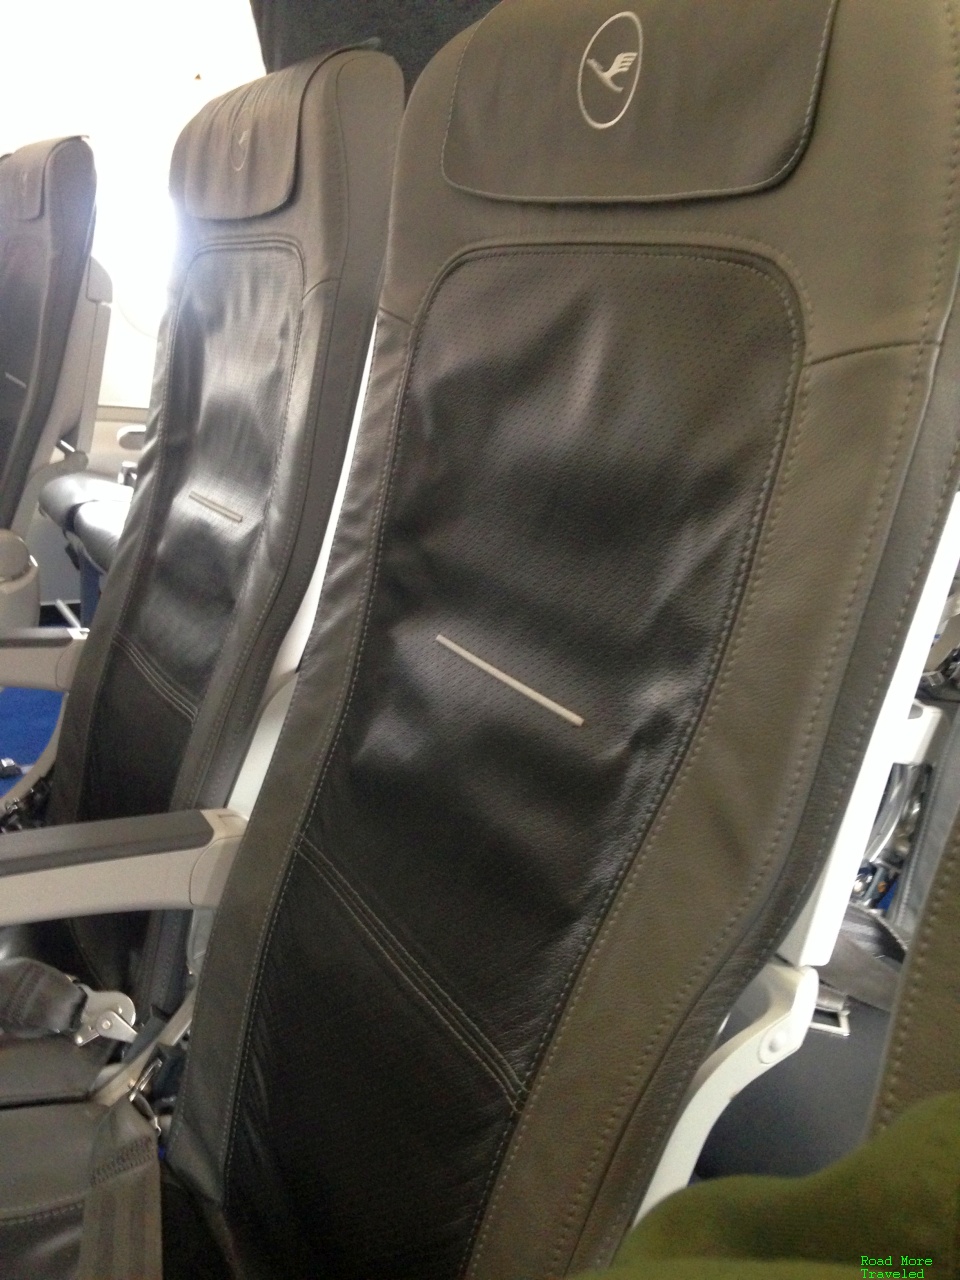 Lufthansa A320 Economy Class - seat condition